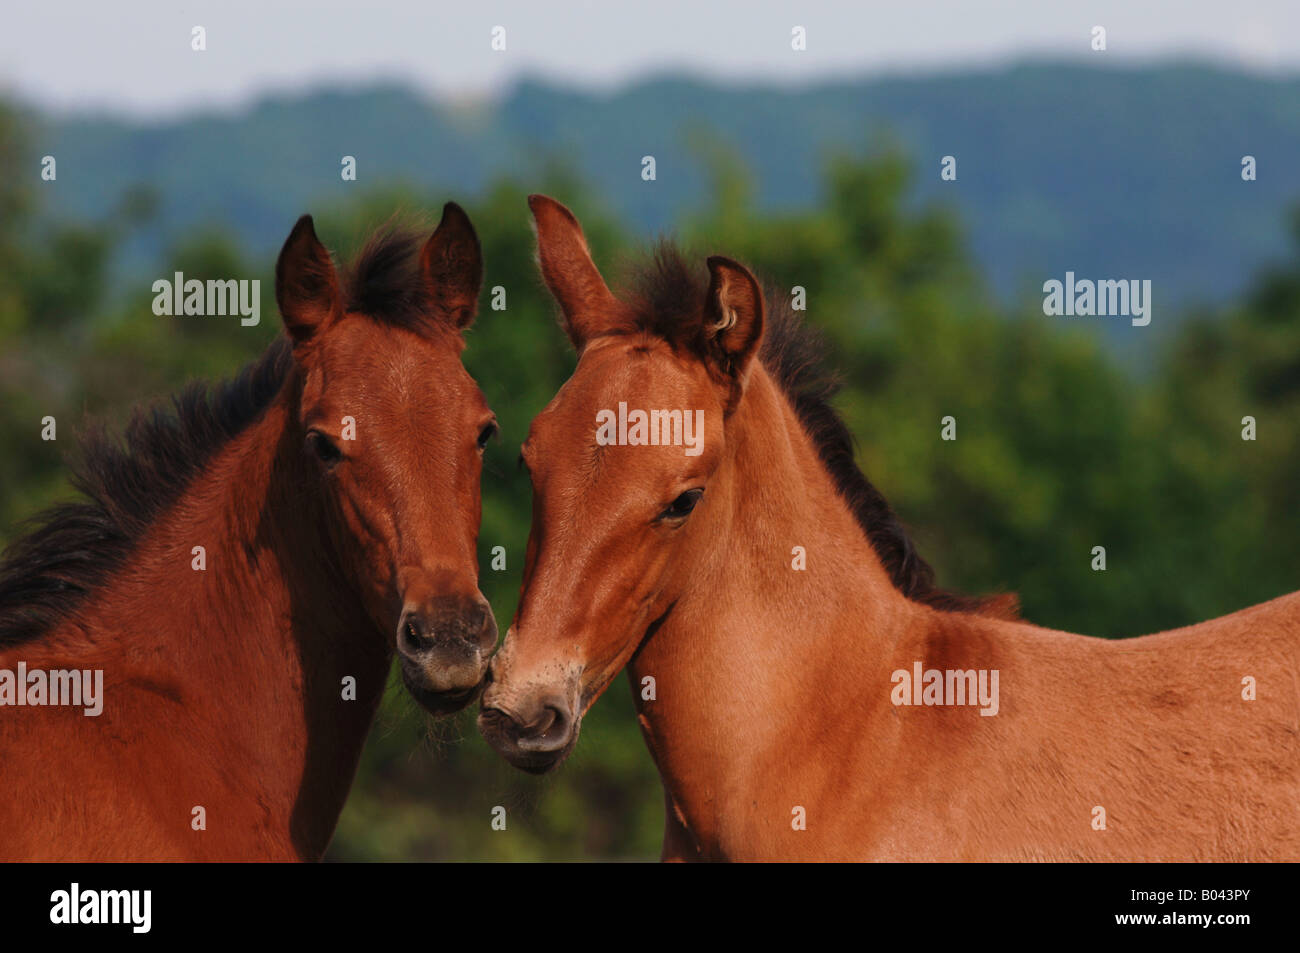 pura raza espanola pre andalusier Andalusian Horse Fohlen Andalusierfohlen Pre Fohlen Foal Stock Photo